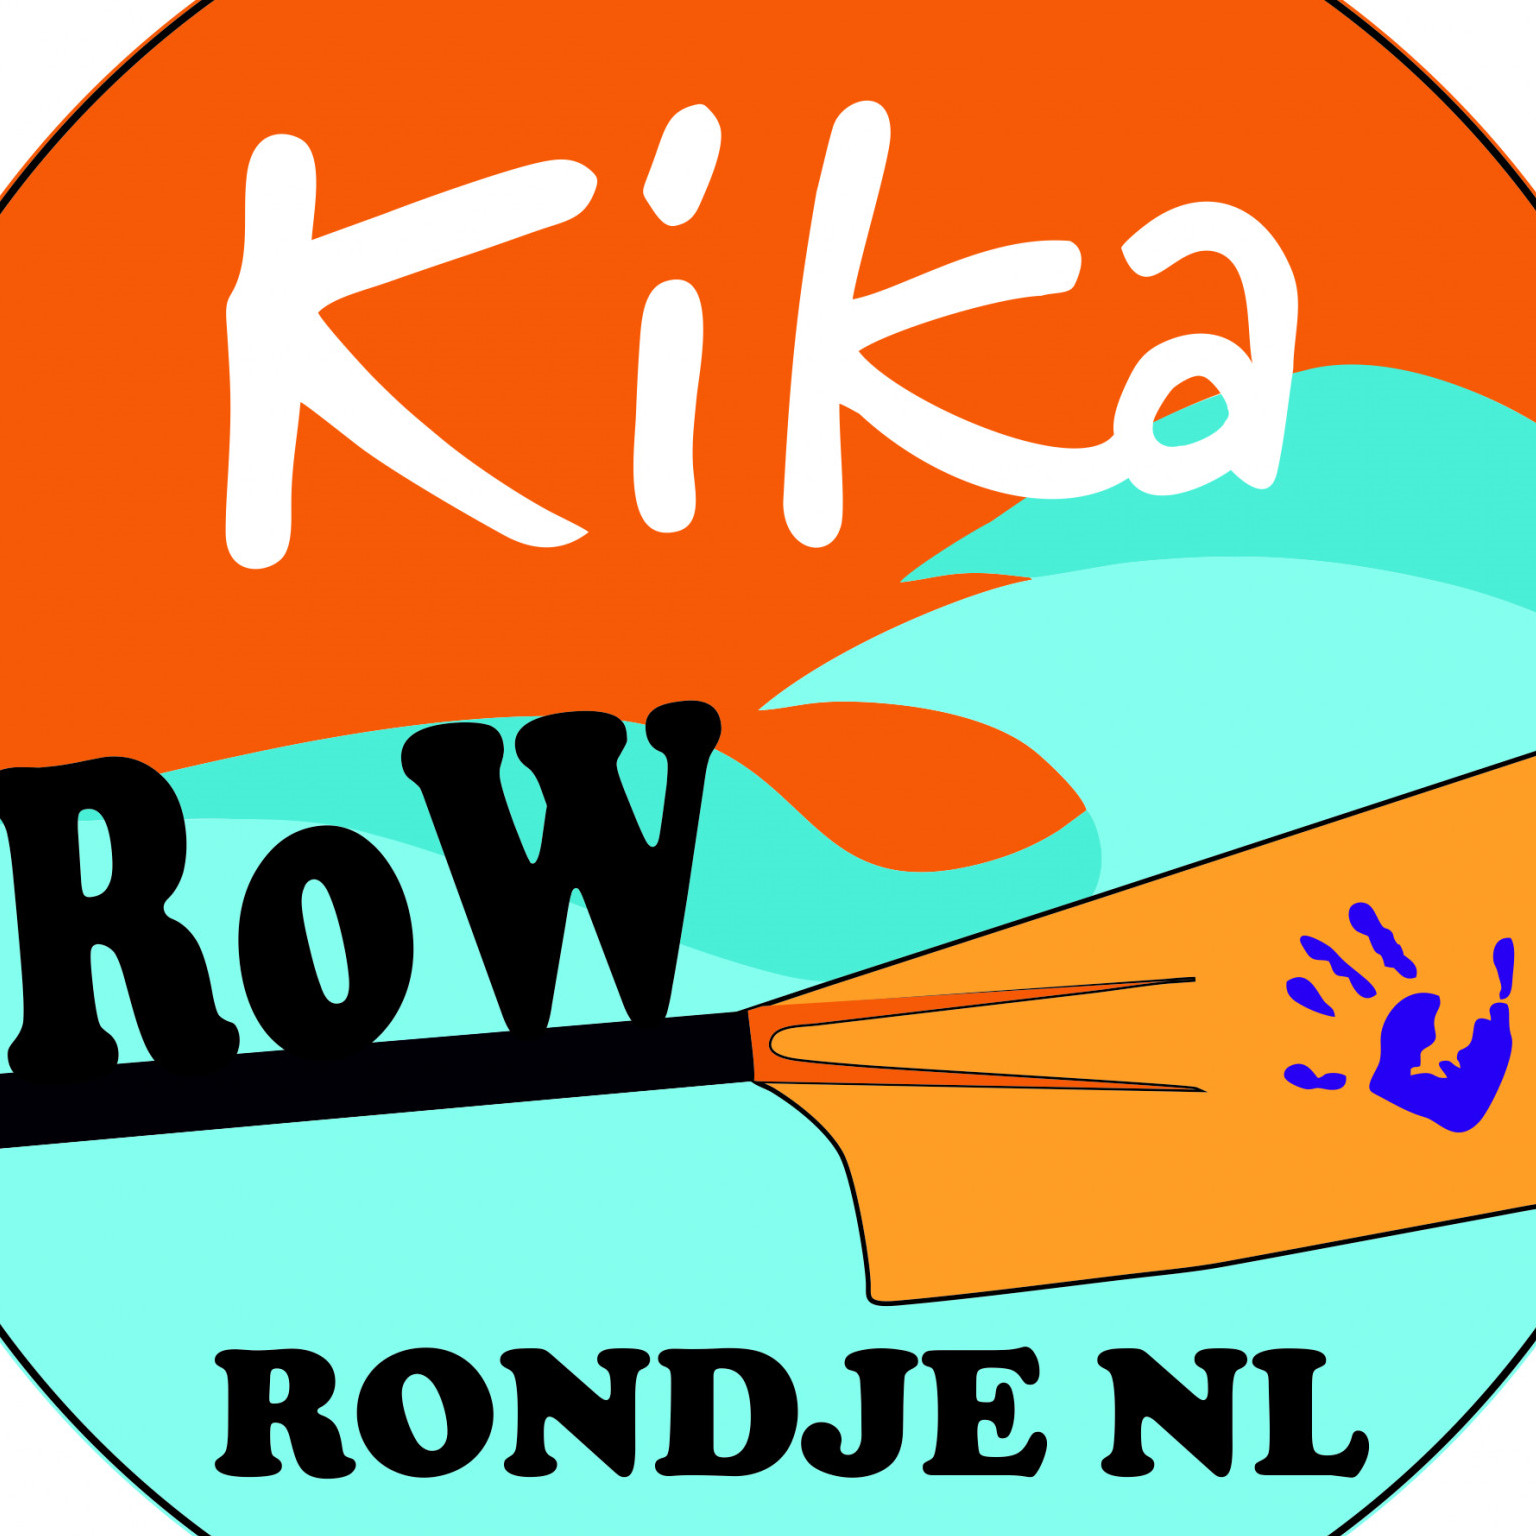 KiKaRow Rondje NL roeit het laatste weekend in